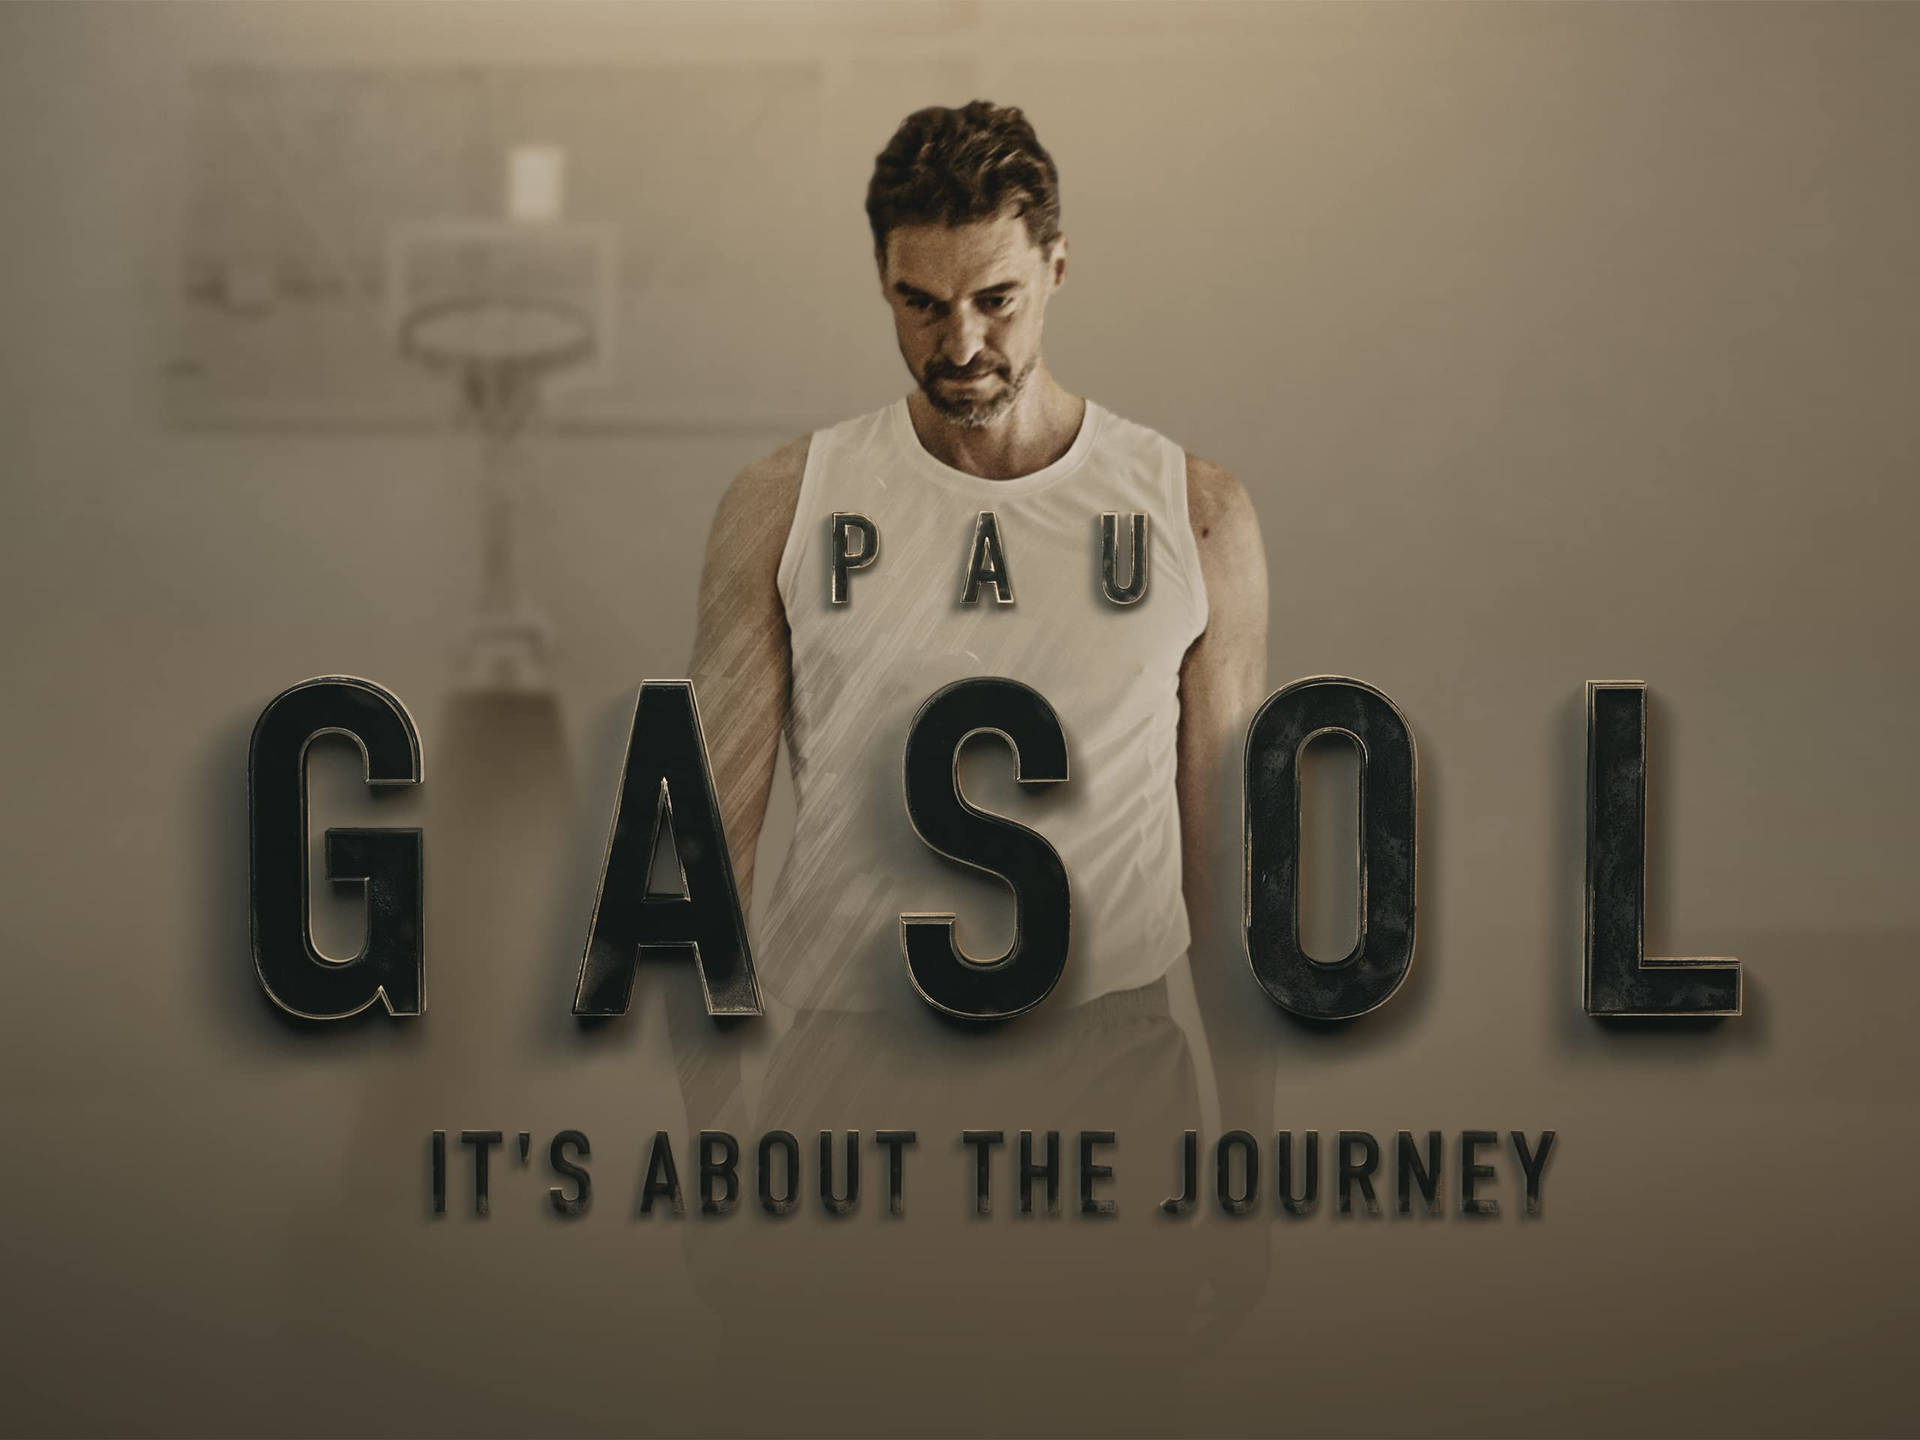 Pau Gasol Journey Poster Background